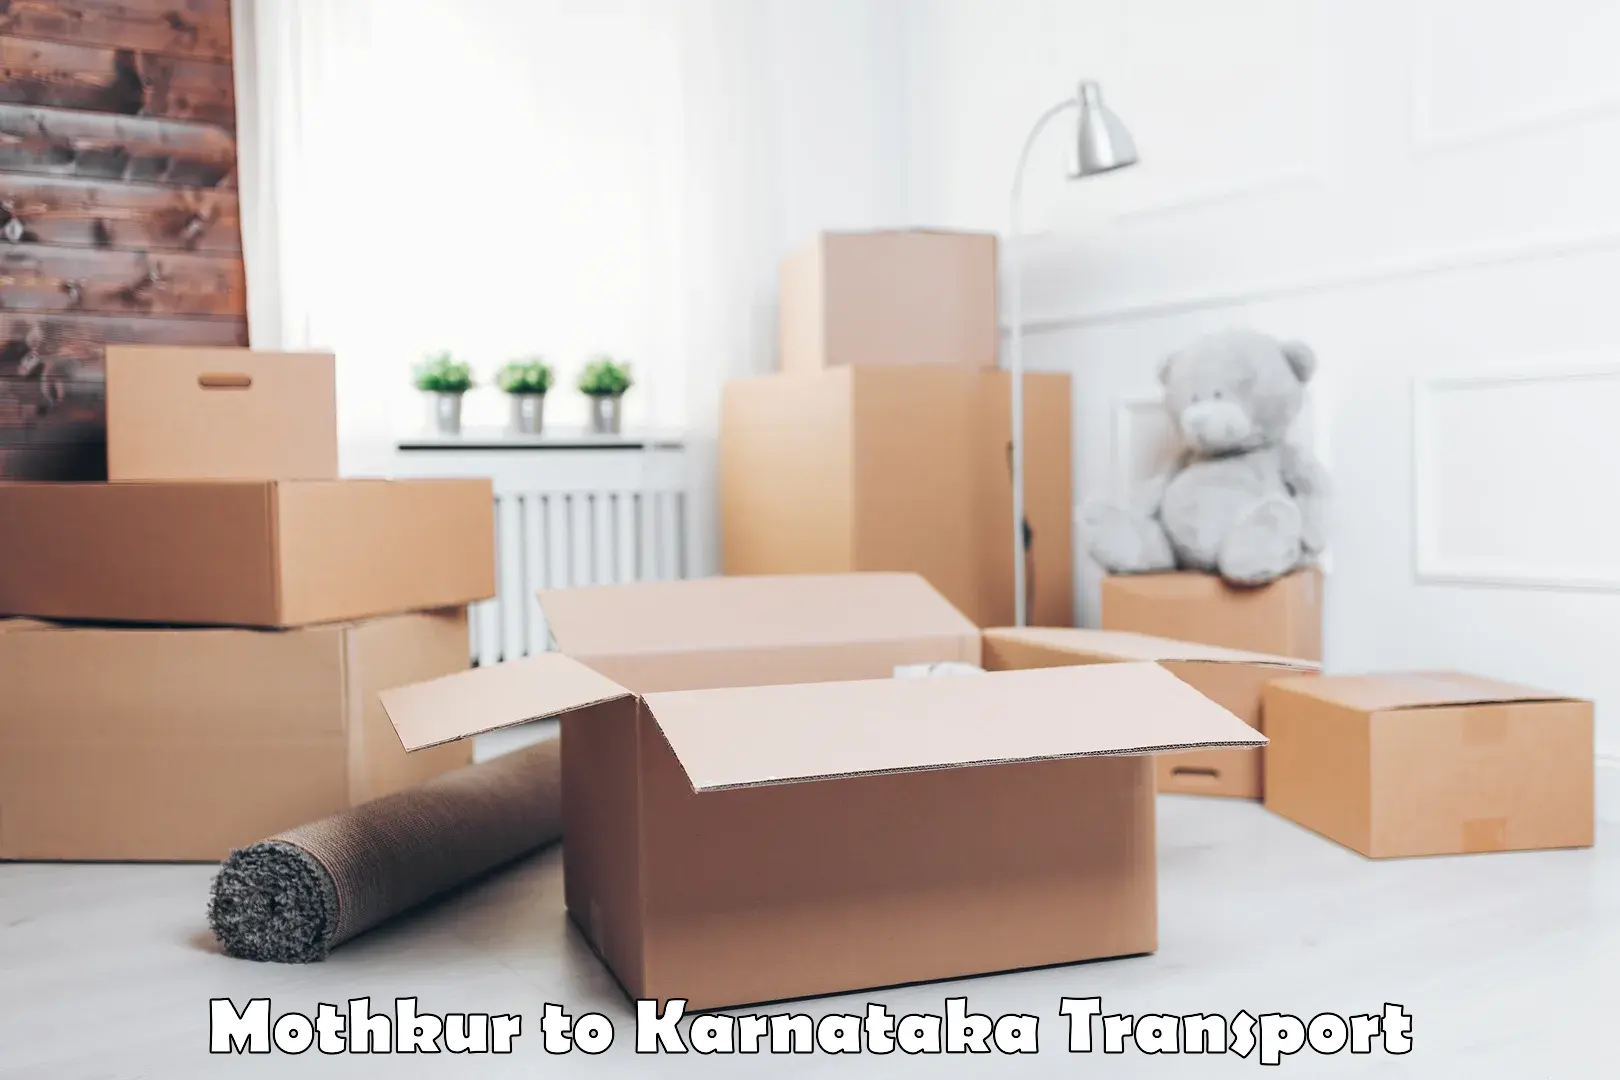 Commercial transport service Mothkur to Mannaekhelli